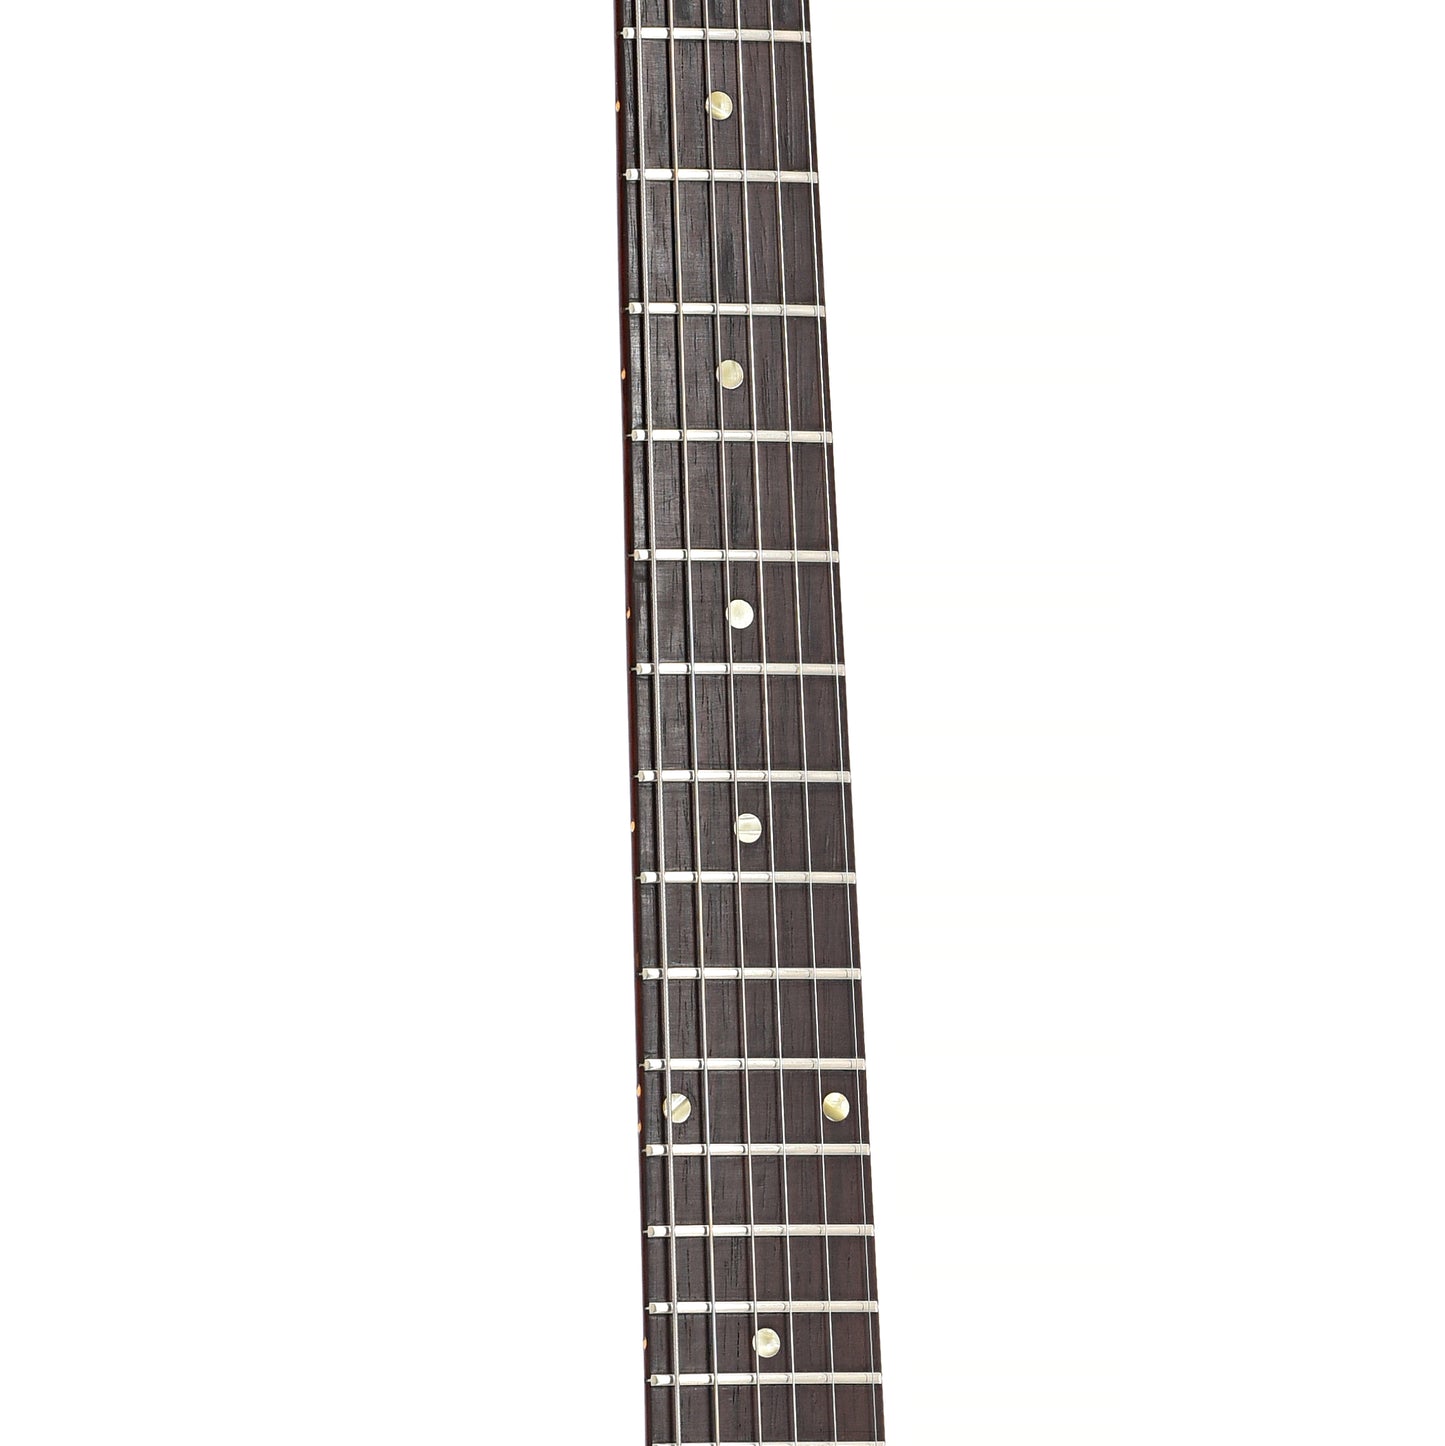 Fretboard of Gibson Les Paul Jr Electric Guitar (1960)